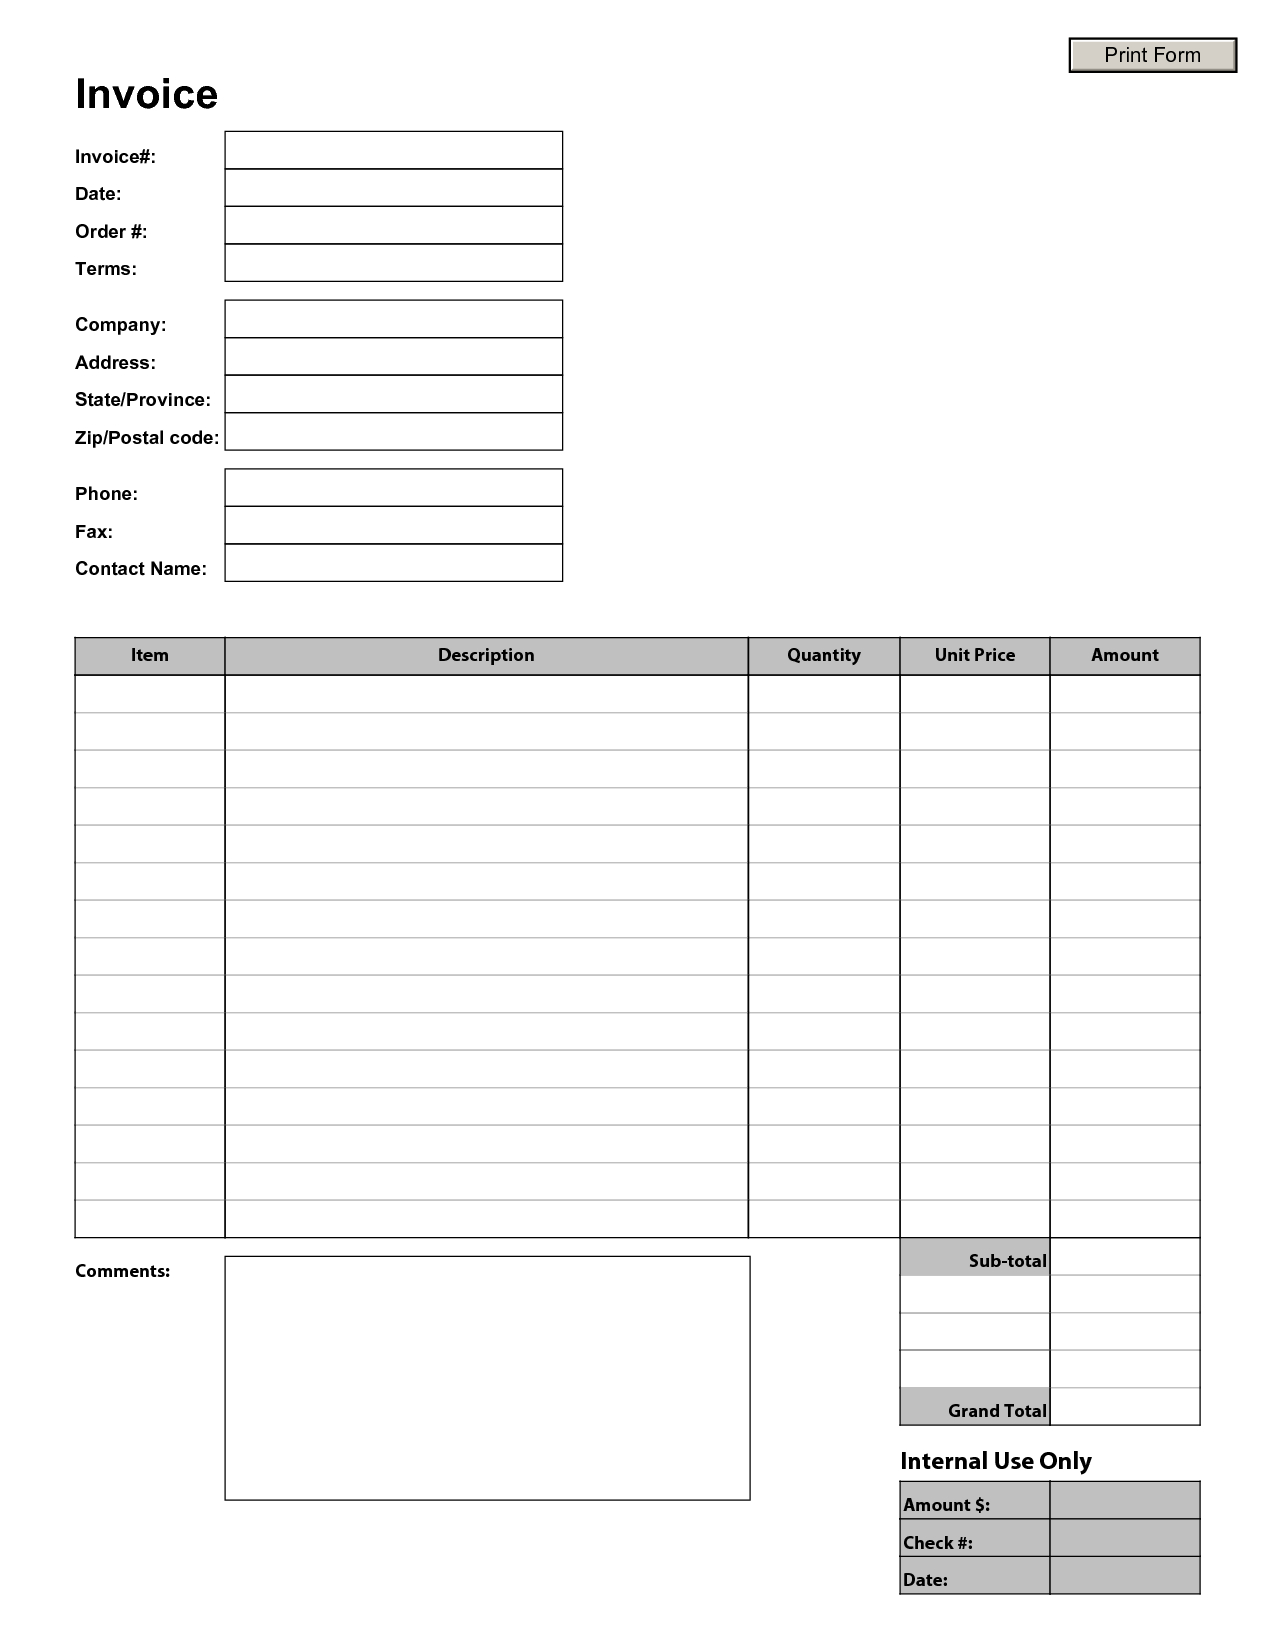 Blank Invoice Template | Blank Invoice | Arsenal | Printable Invoice - Free Printable Blank Invoice Sheet